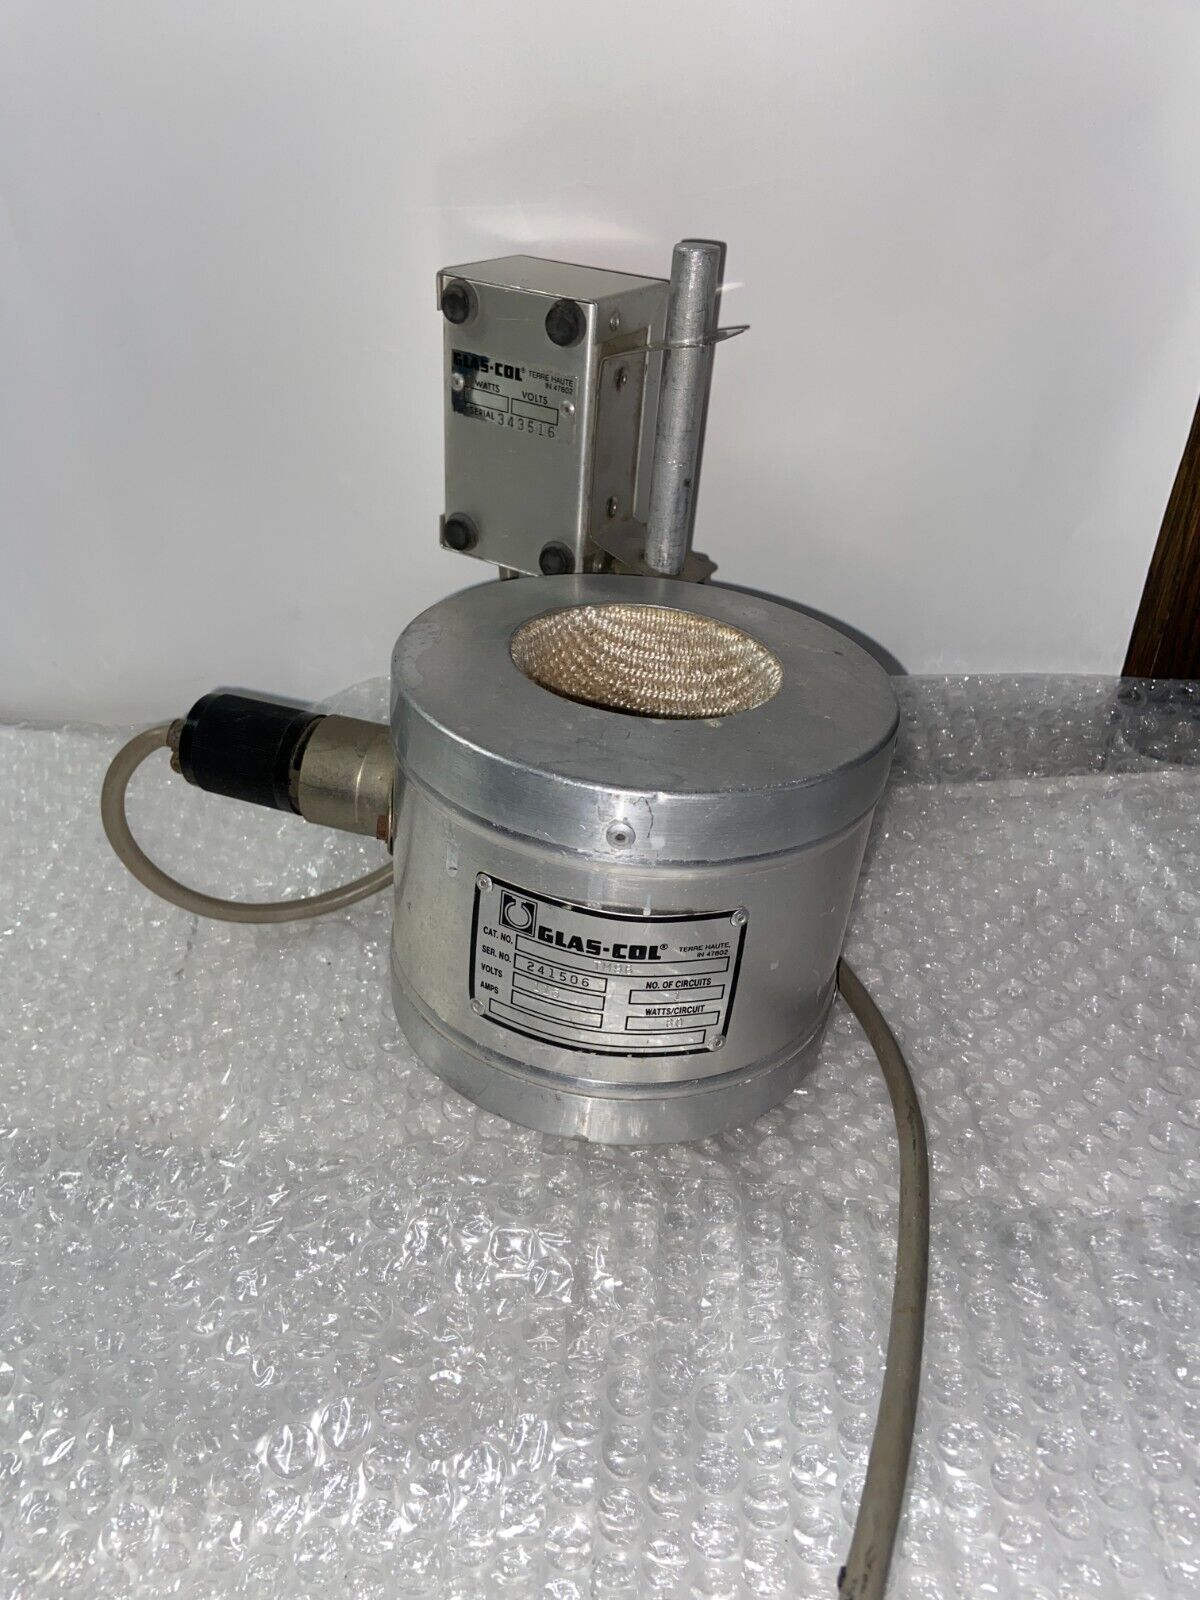 100mL Glas-Col TM96 Heating Mantle w/ PL-112 Temperature Control / Power Supply